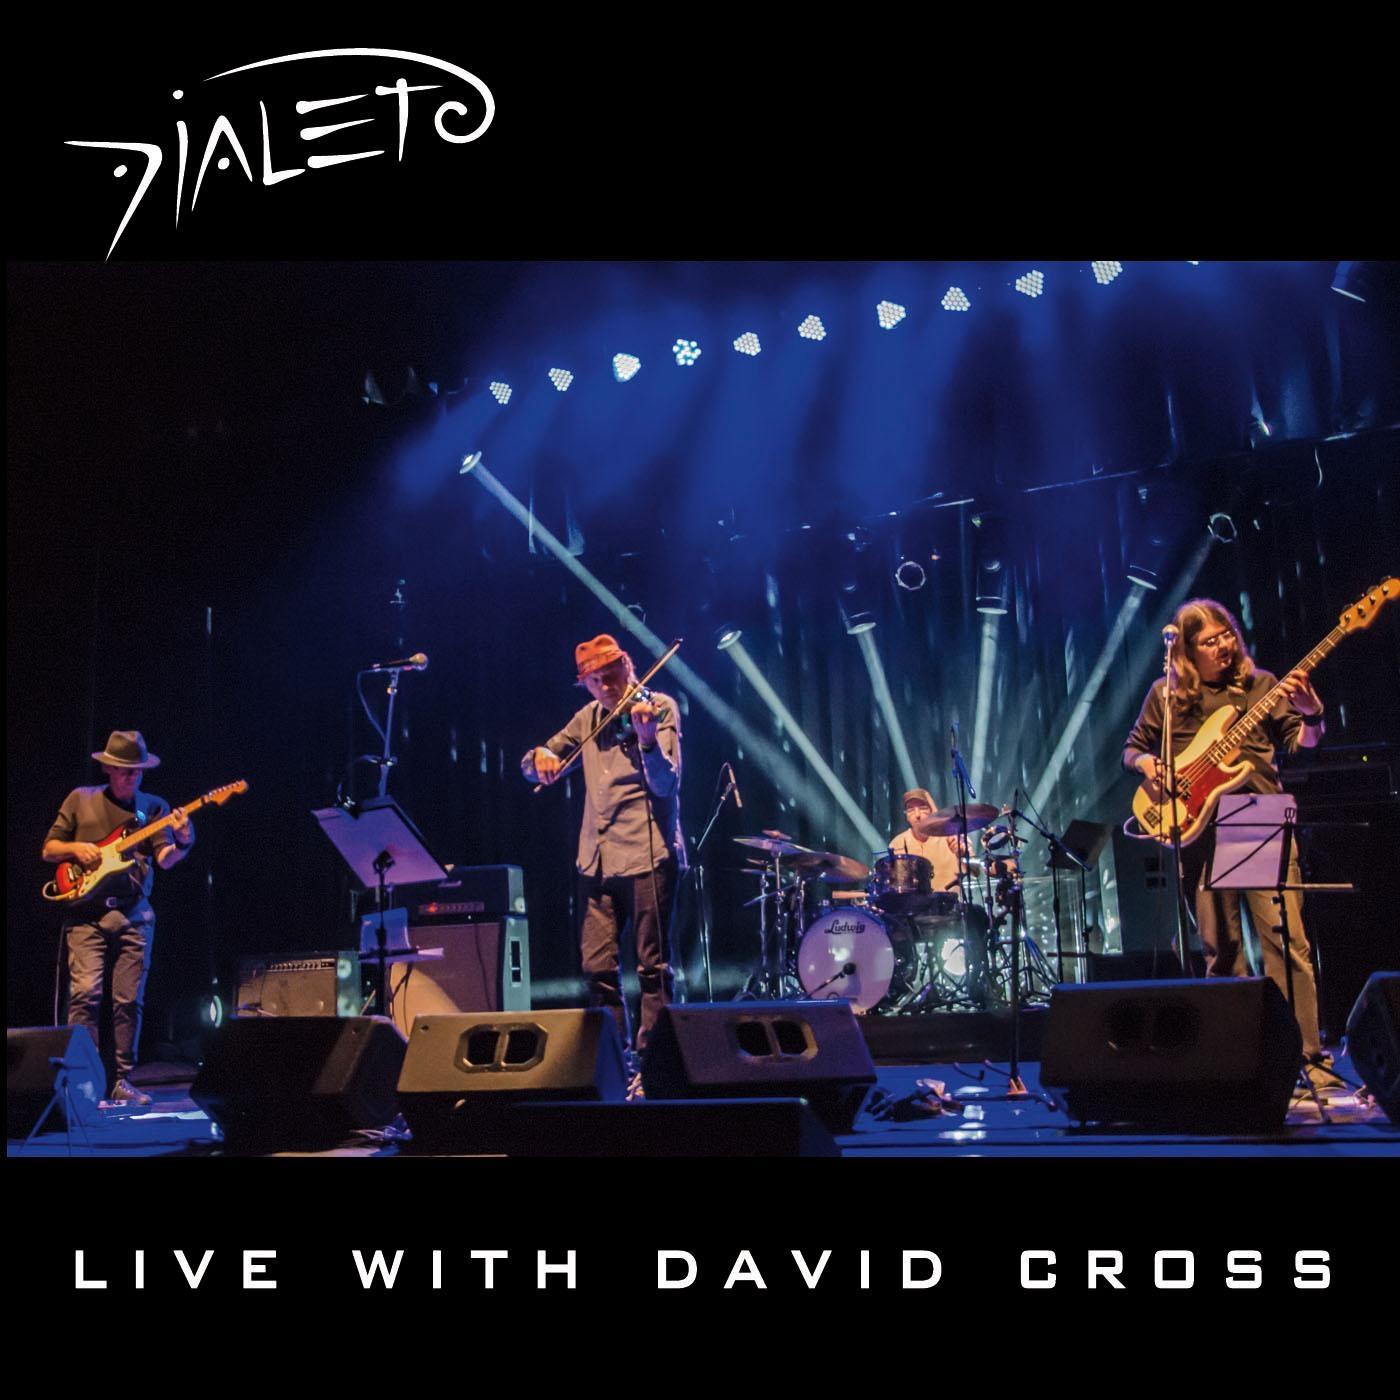 Dialeto - Starless (Live) [feat. David Cross]